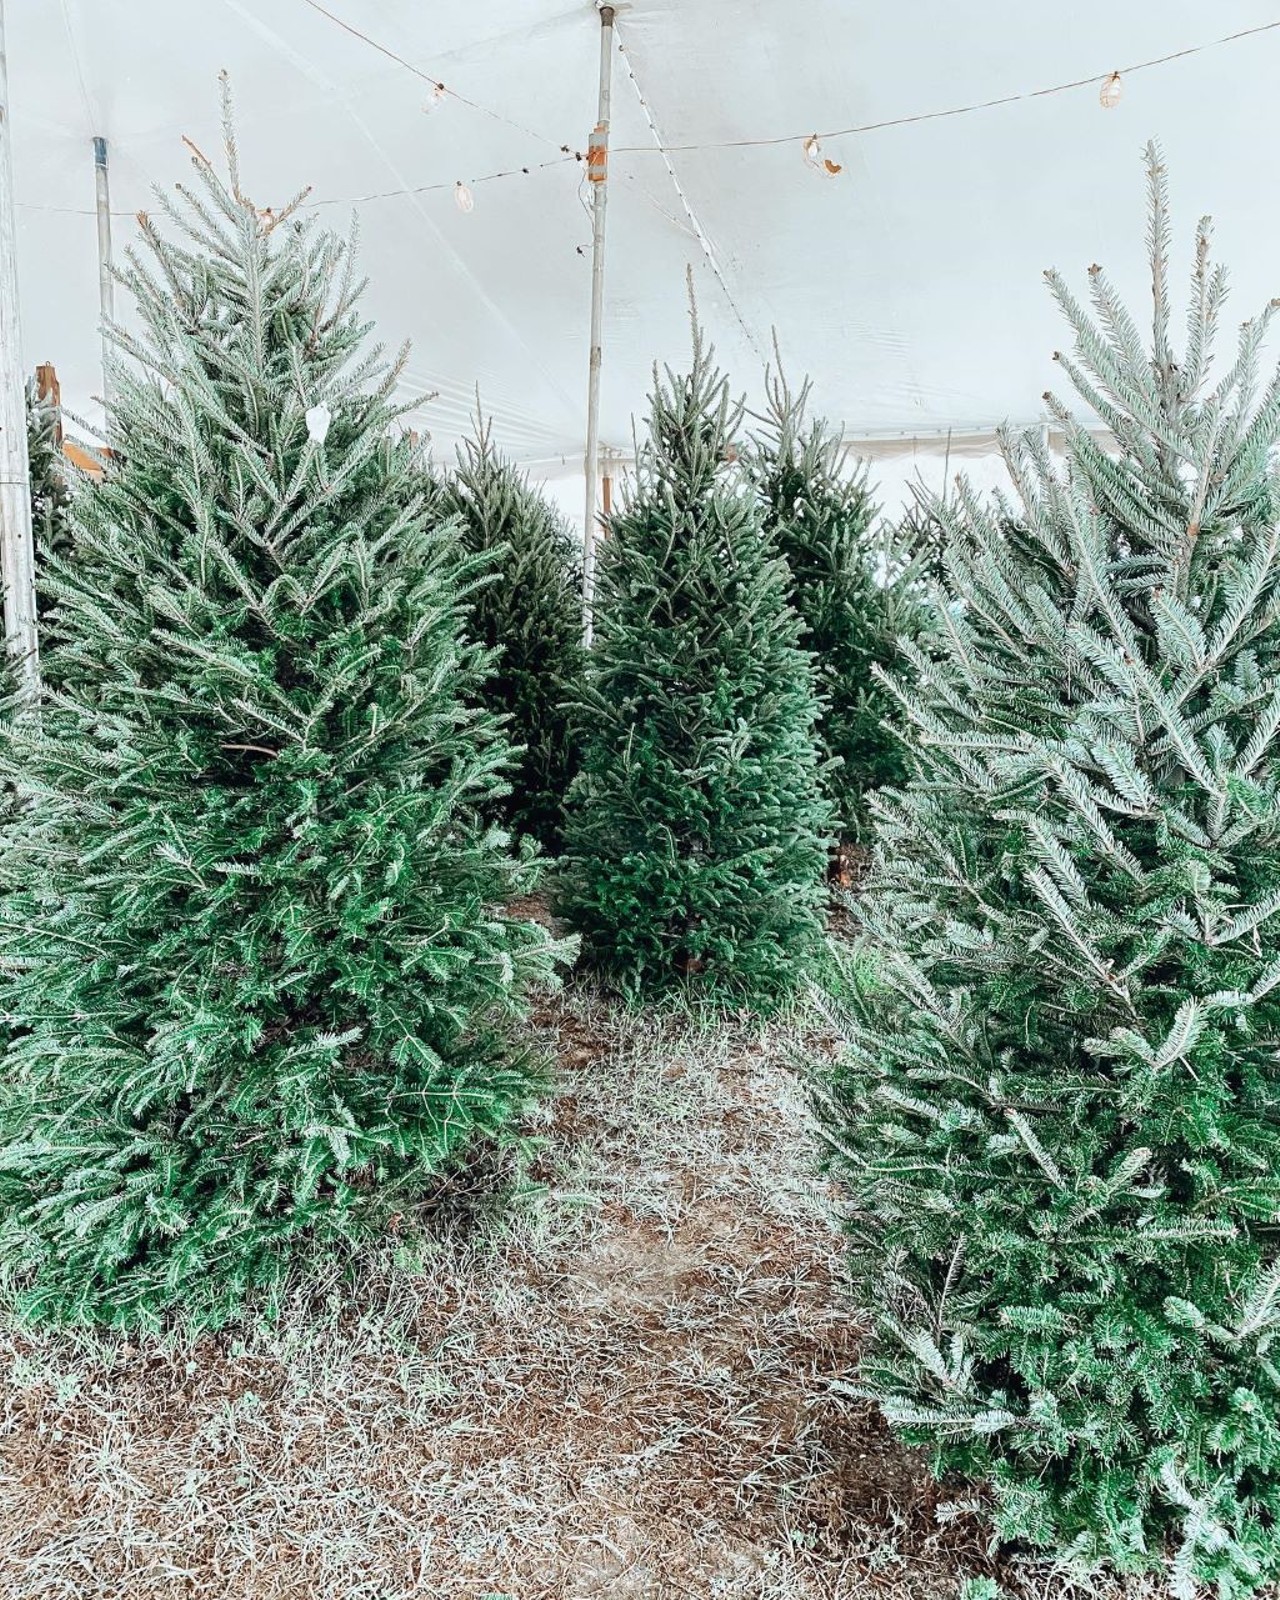 La agenda semanal cuenta la historia de Ciro and Sons Christmas Trees